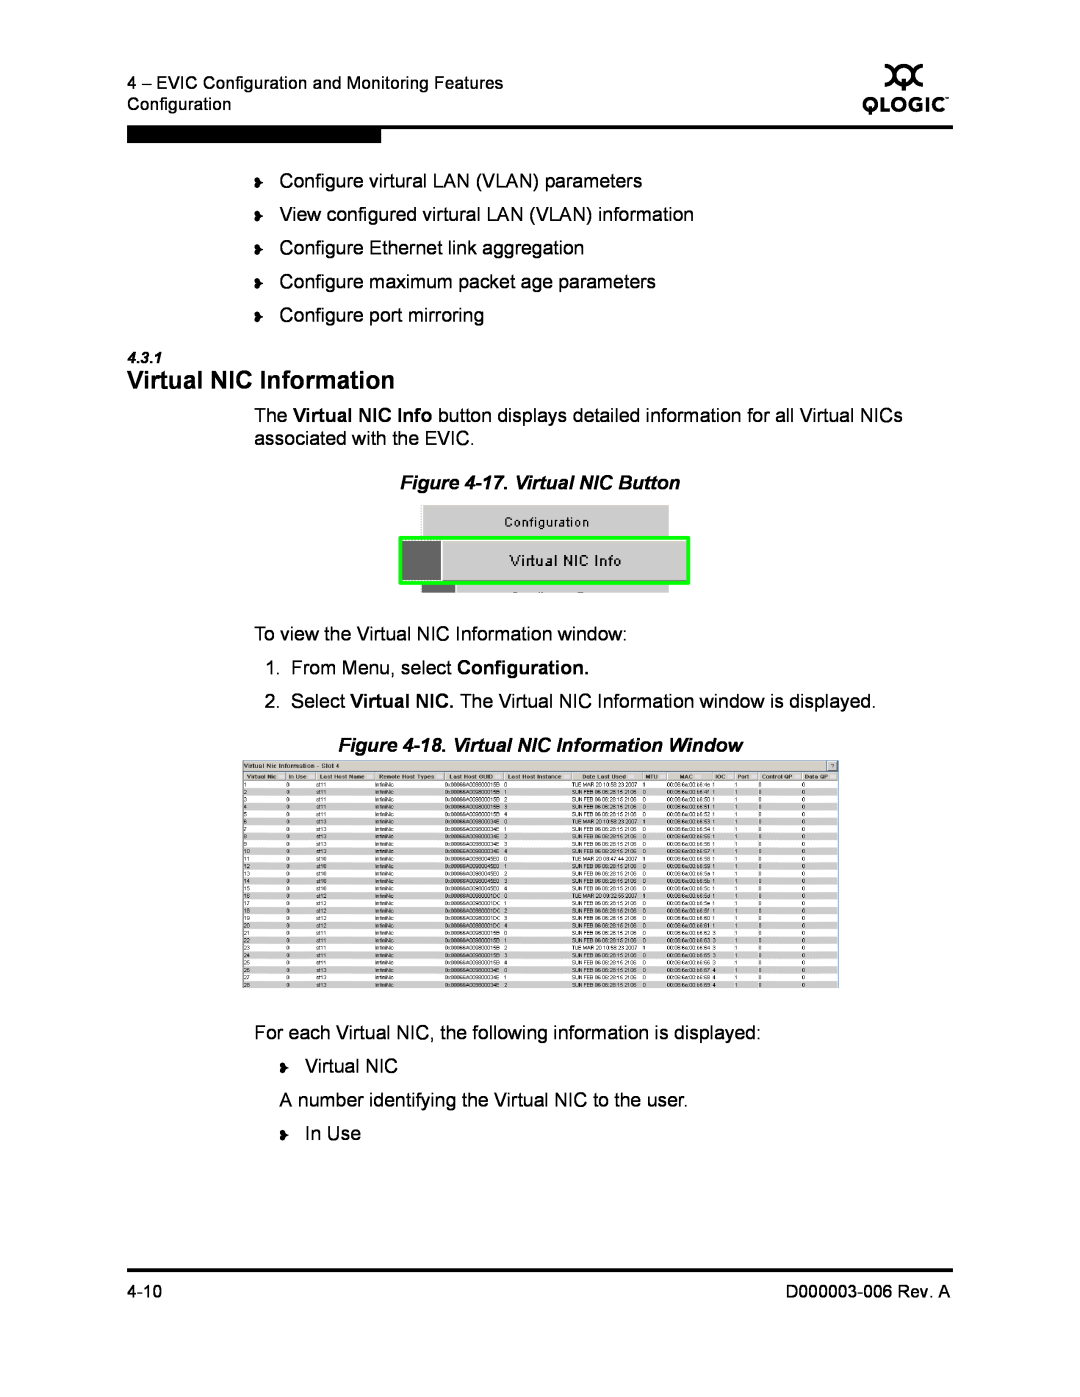 Q-Logic 9000 manual 17. Virtual NIC Button, 18. Virtual NIC Information Window 